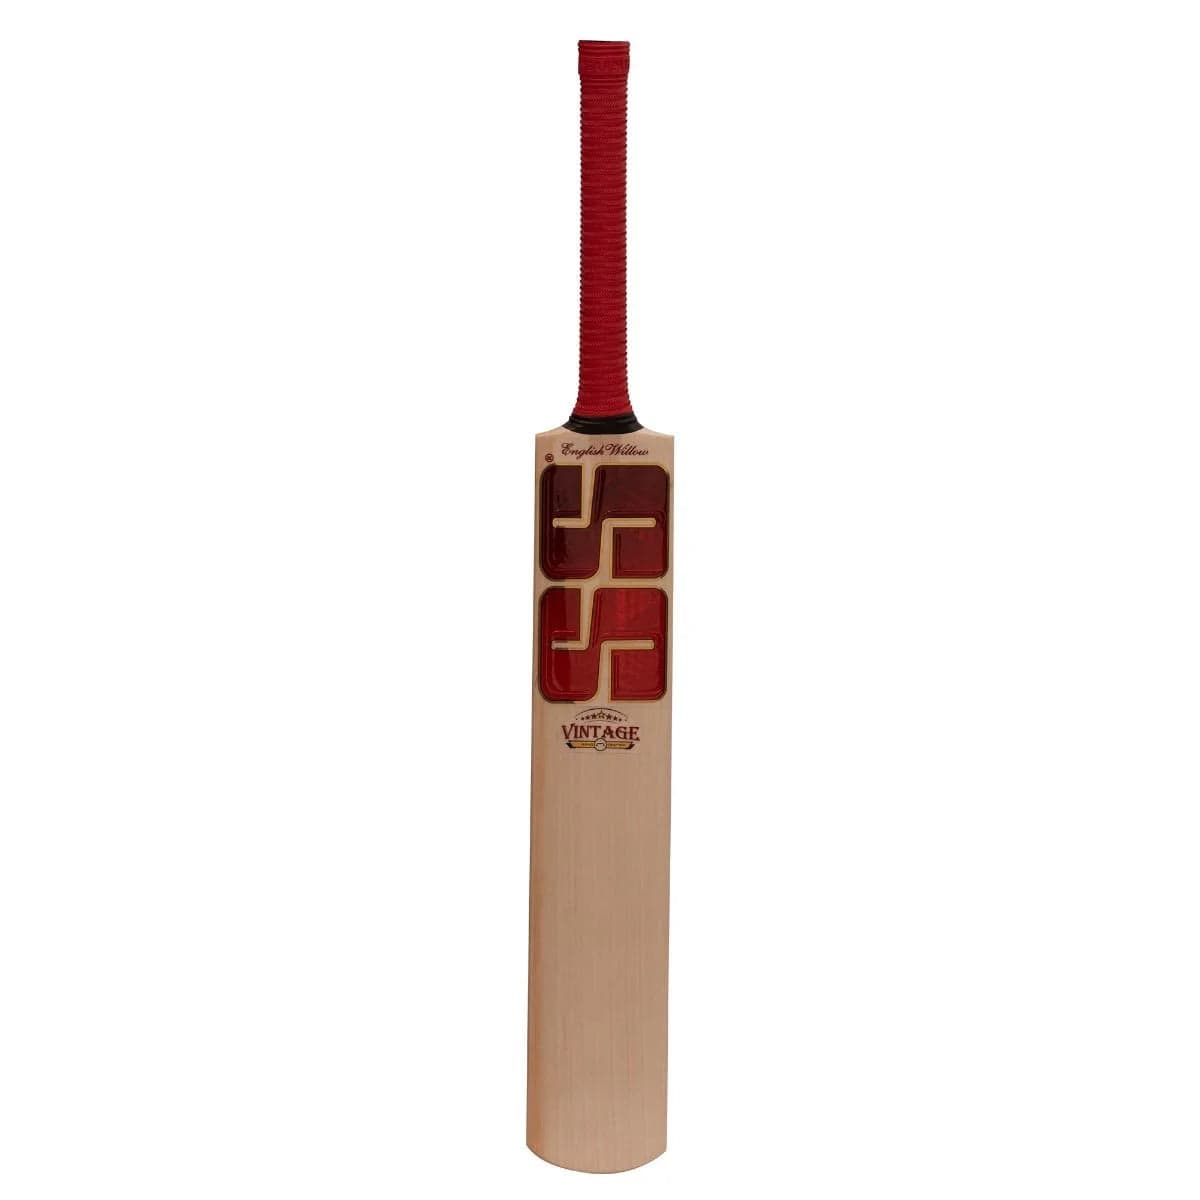 SS Cricket Bats Short Hand / Light 2lbs 6oz - 2lbs 8oz SS Vintage 2.0 English Willow Cricket Bat